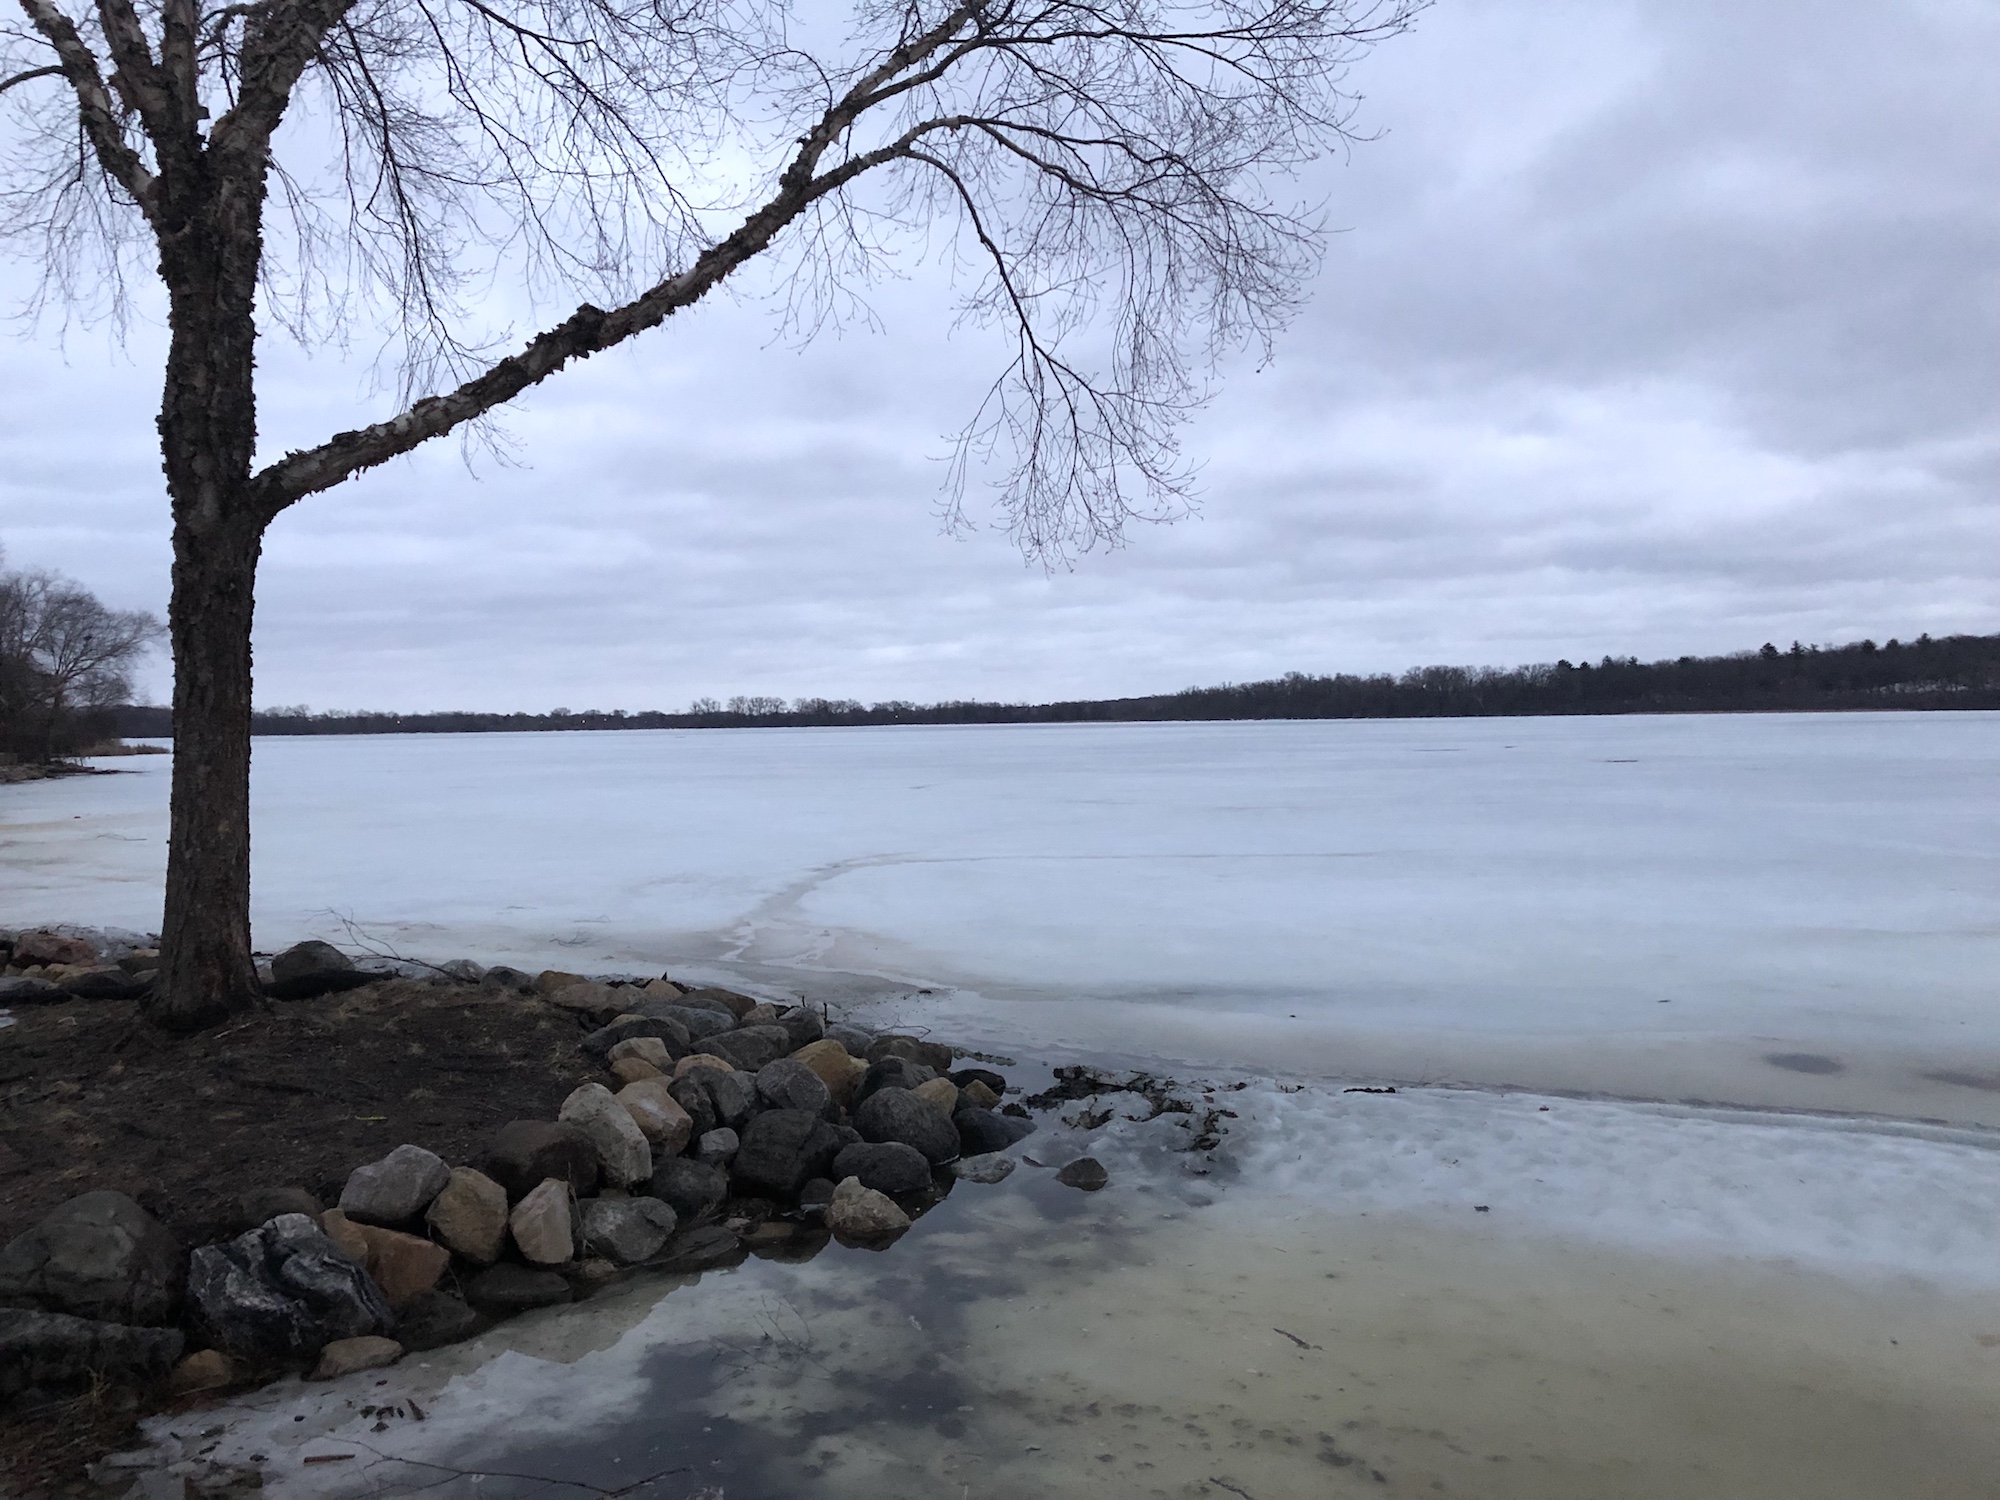 Lake Wingra on March 15, 2019.